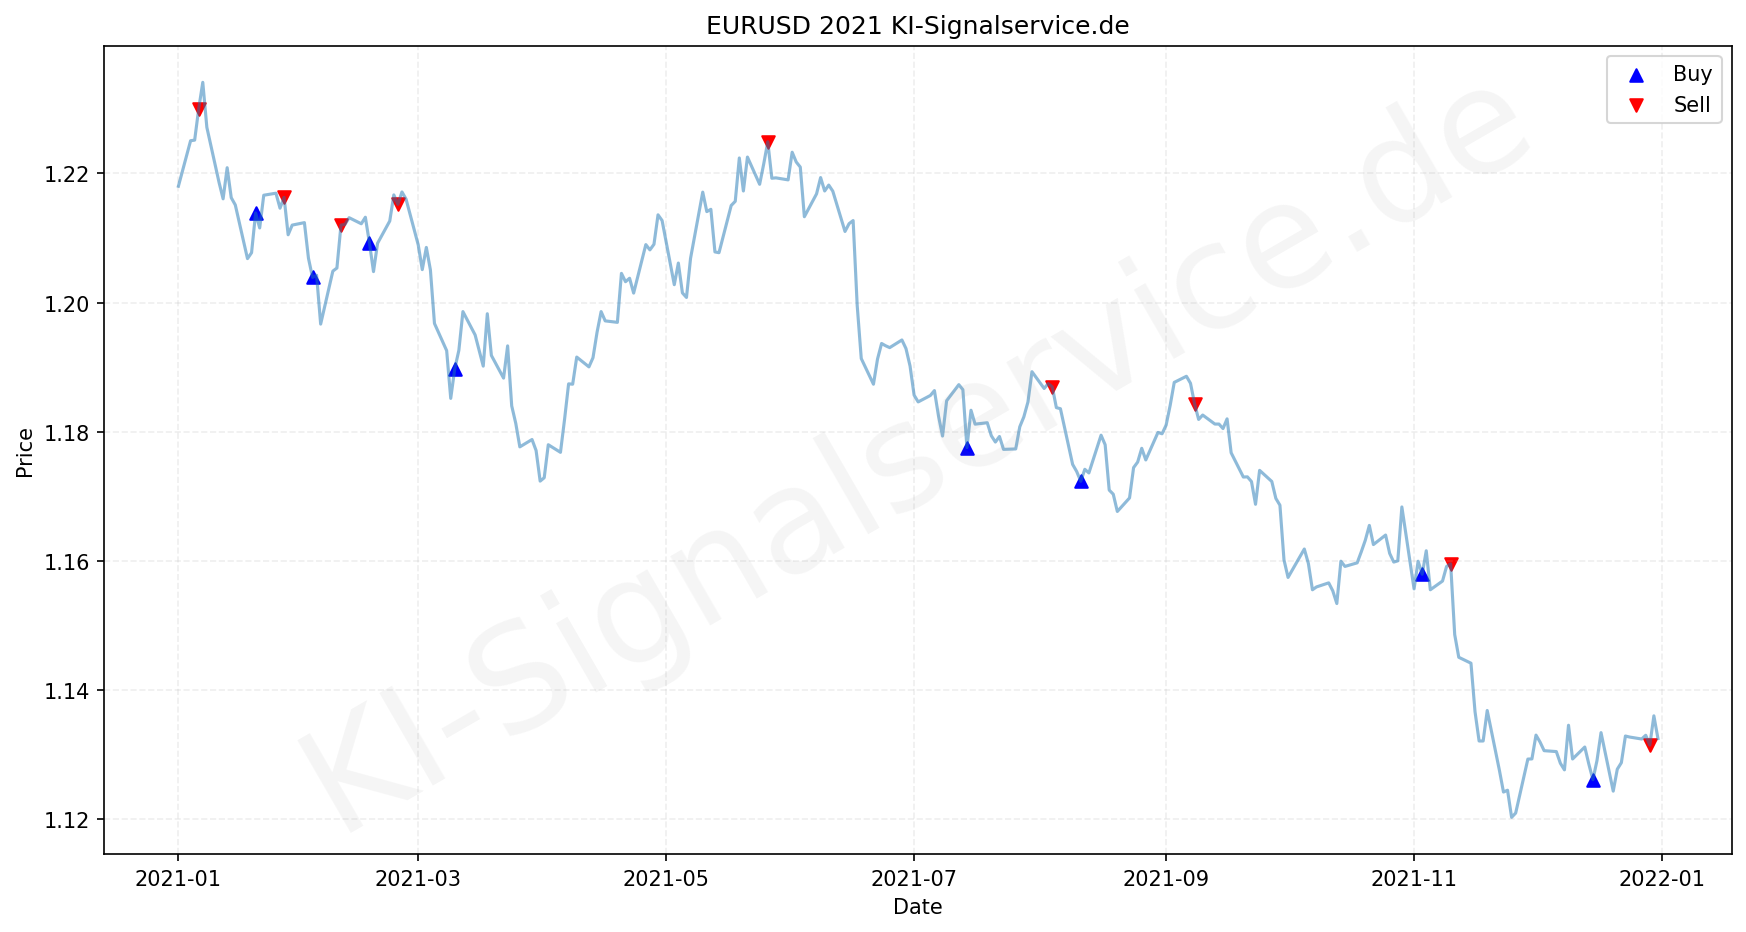 EURUSD Chart - KI Tradingsignale 2021